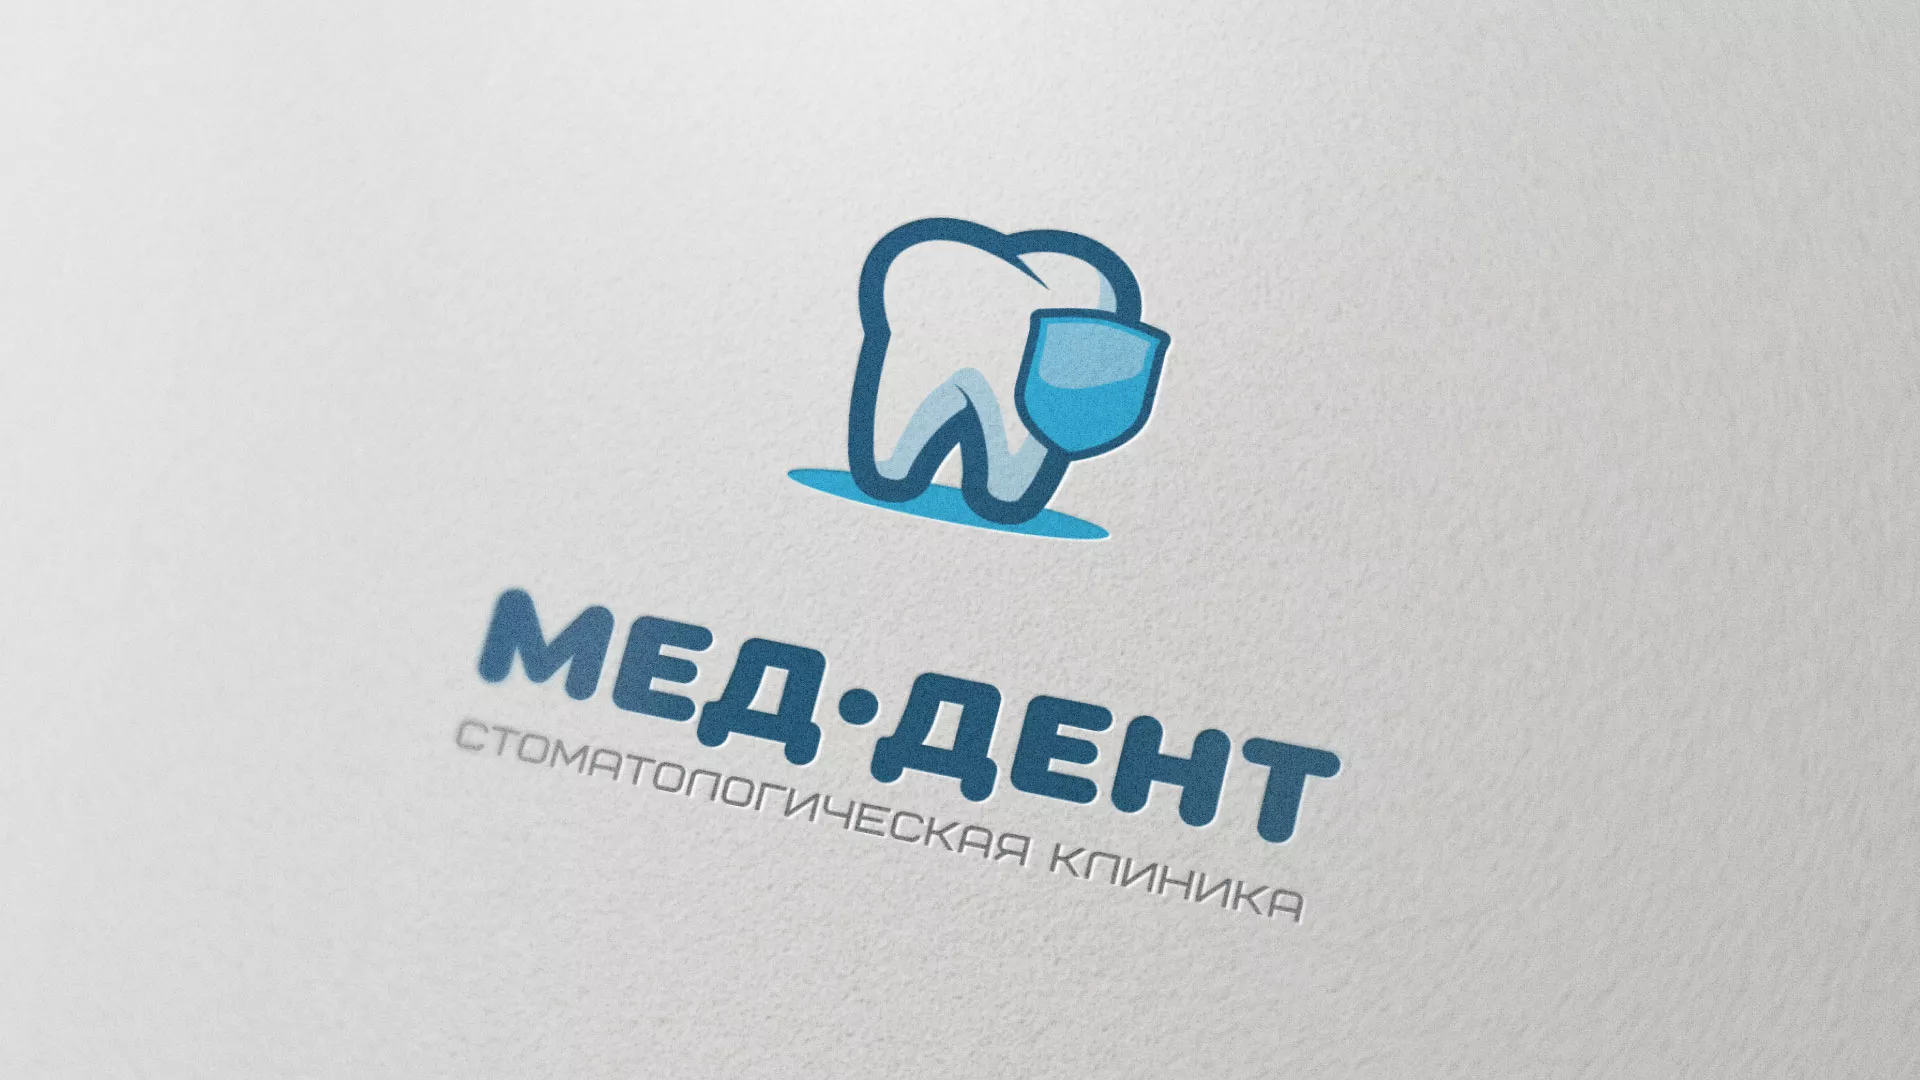 Разработка логотипа стоматологической клиники «МЕД-ДЕНТ» в Кизилюрте